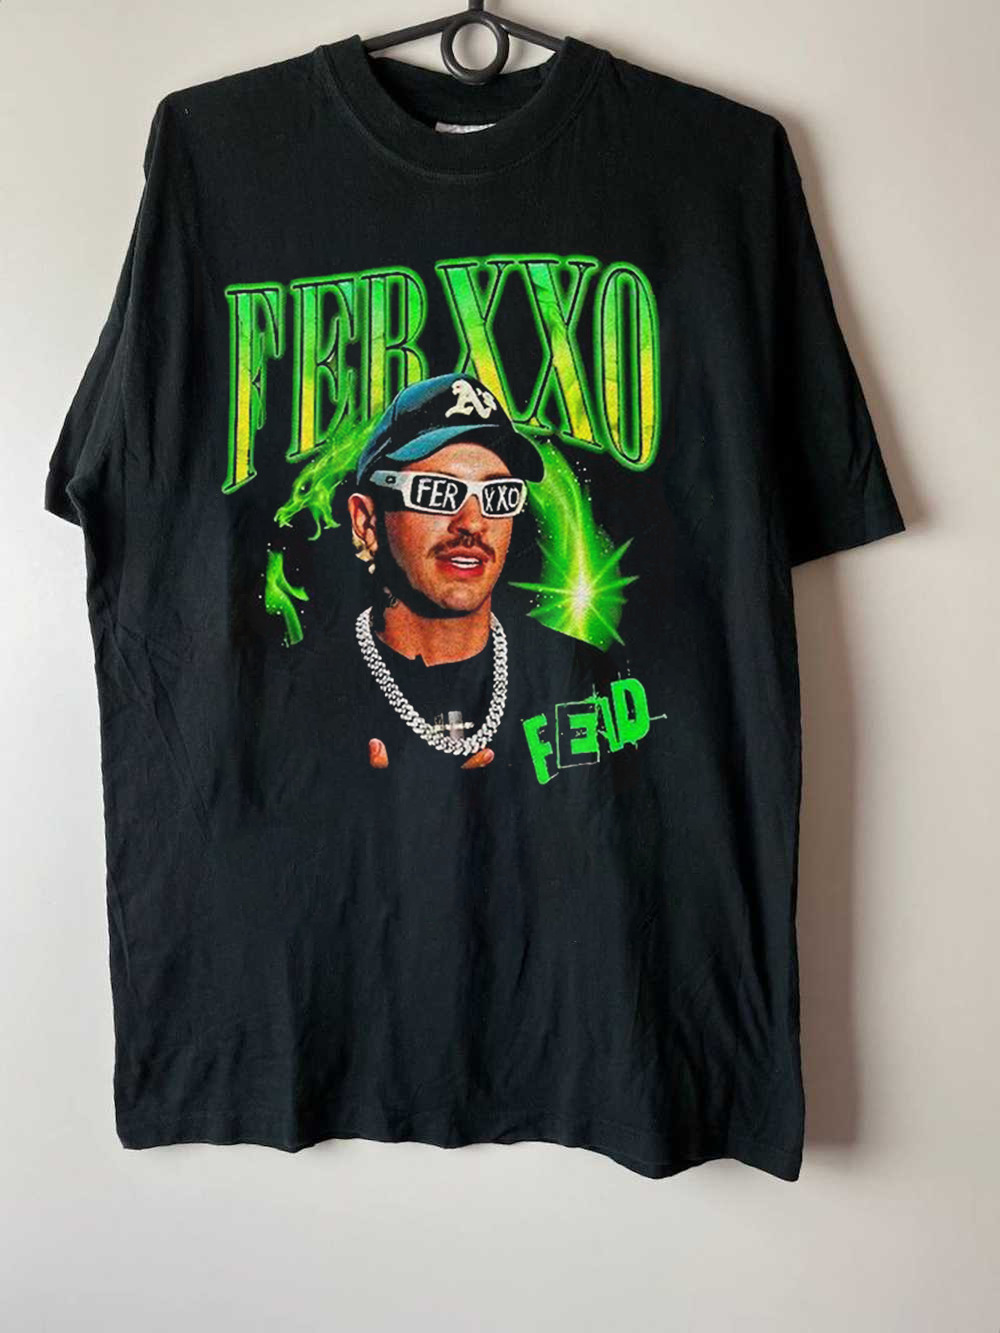 Feid Ferxxo Hiphop Rapper Singer Fans Gift Unisex T-Shirt All Size S To 5XL